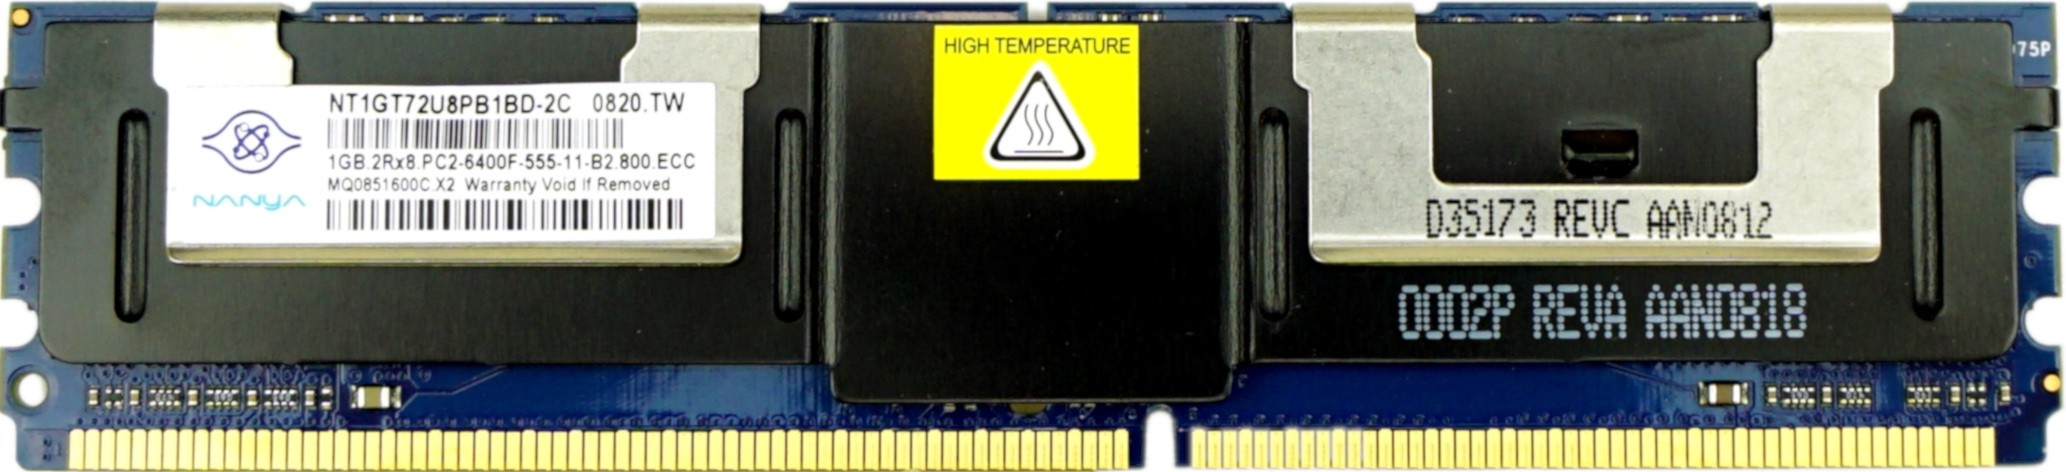 Unbranded - 1GB PC2-6400F (DDR2-800Mhz, 2RX8)